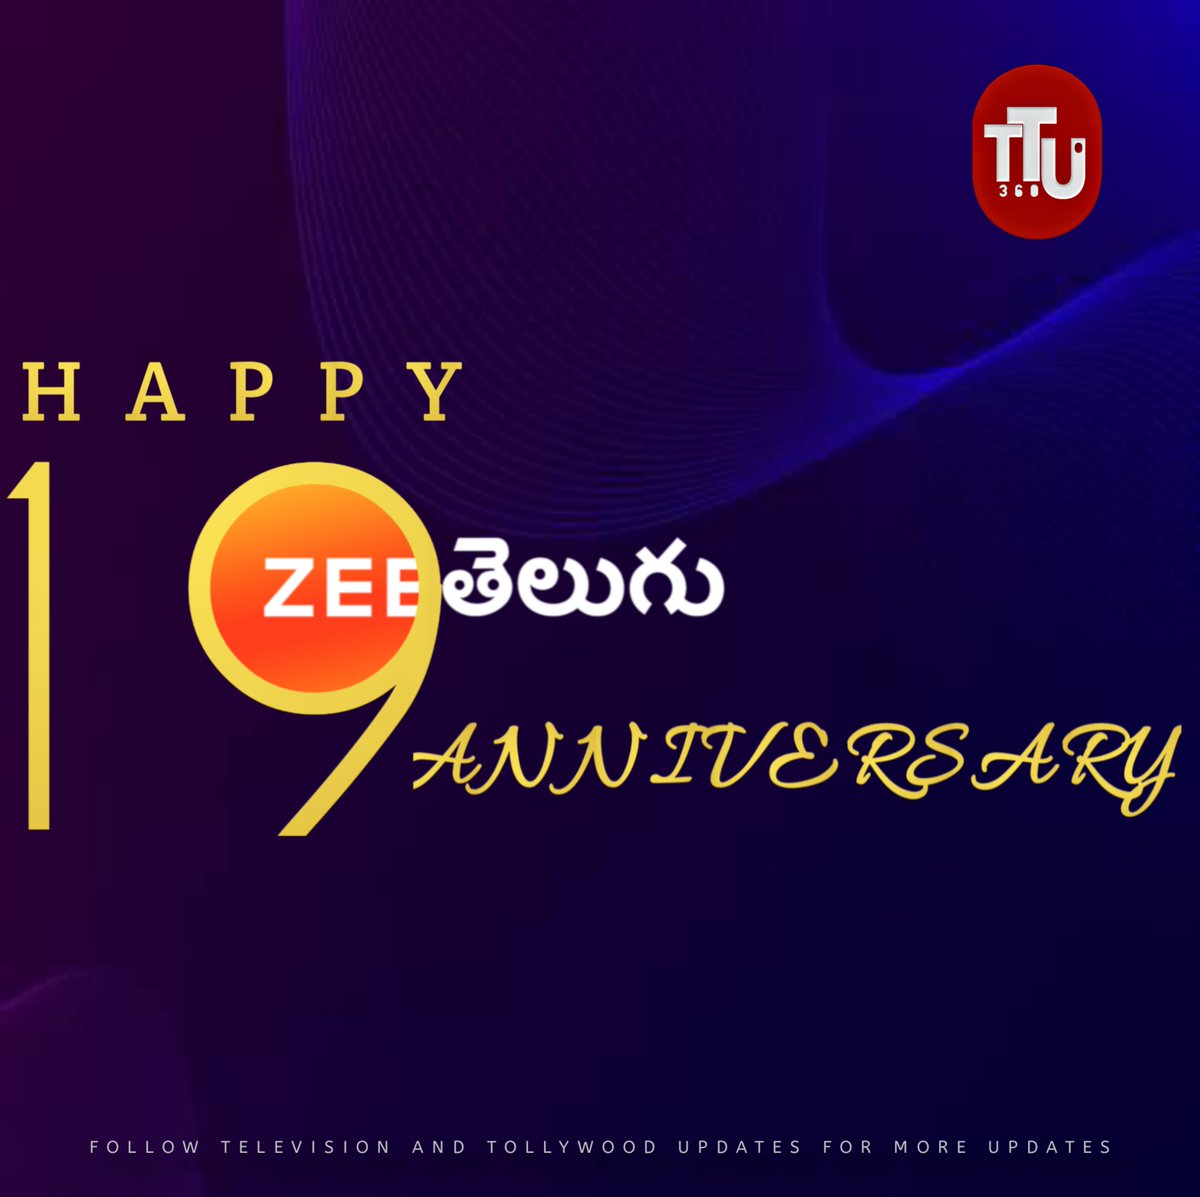 #ZeeTelugu Celebrating 19th Anniversary. Congratulations @ZeeTVTelugu for all these successful years. Share your Zee Telugu memories